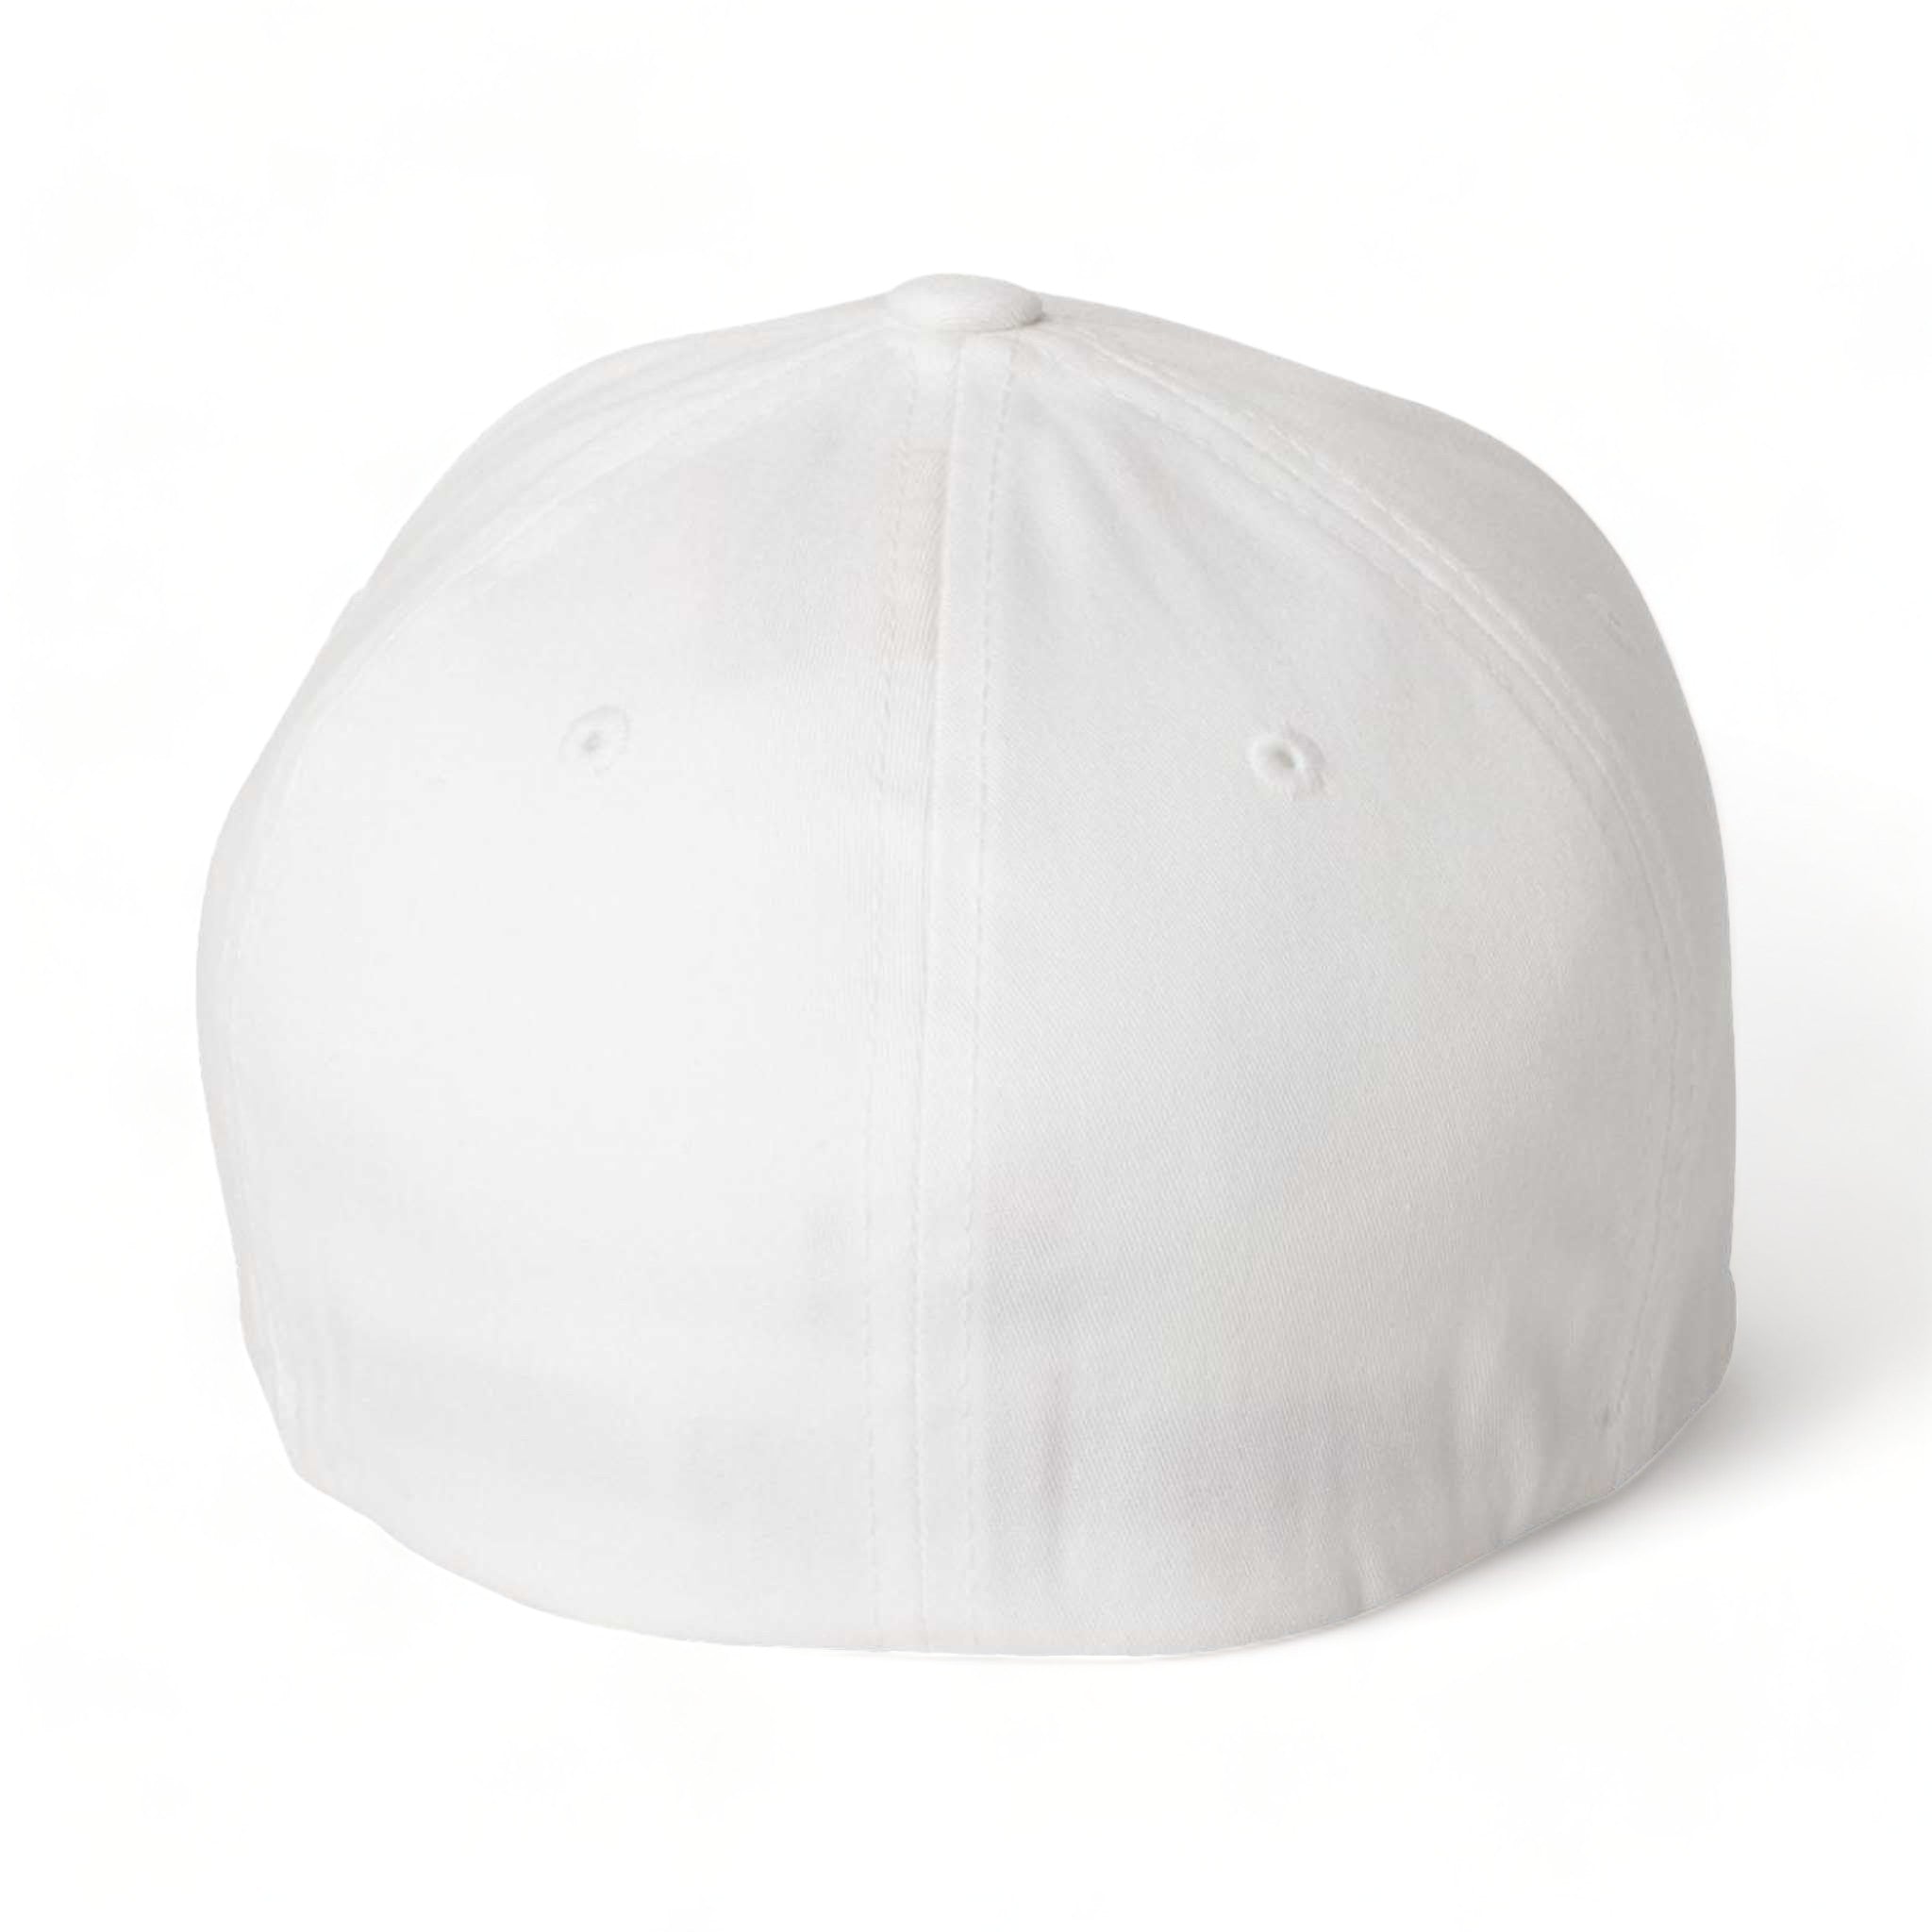 Back view of Flexfit 5001 custom hat in white